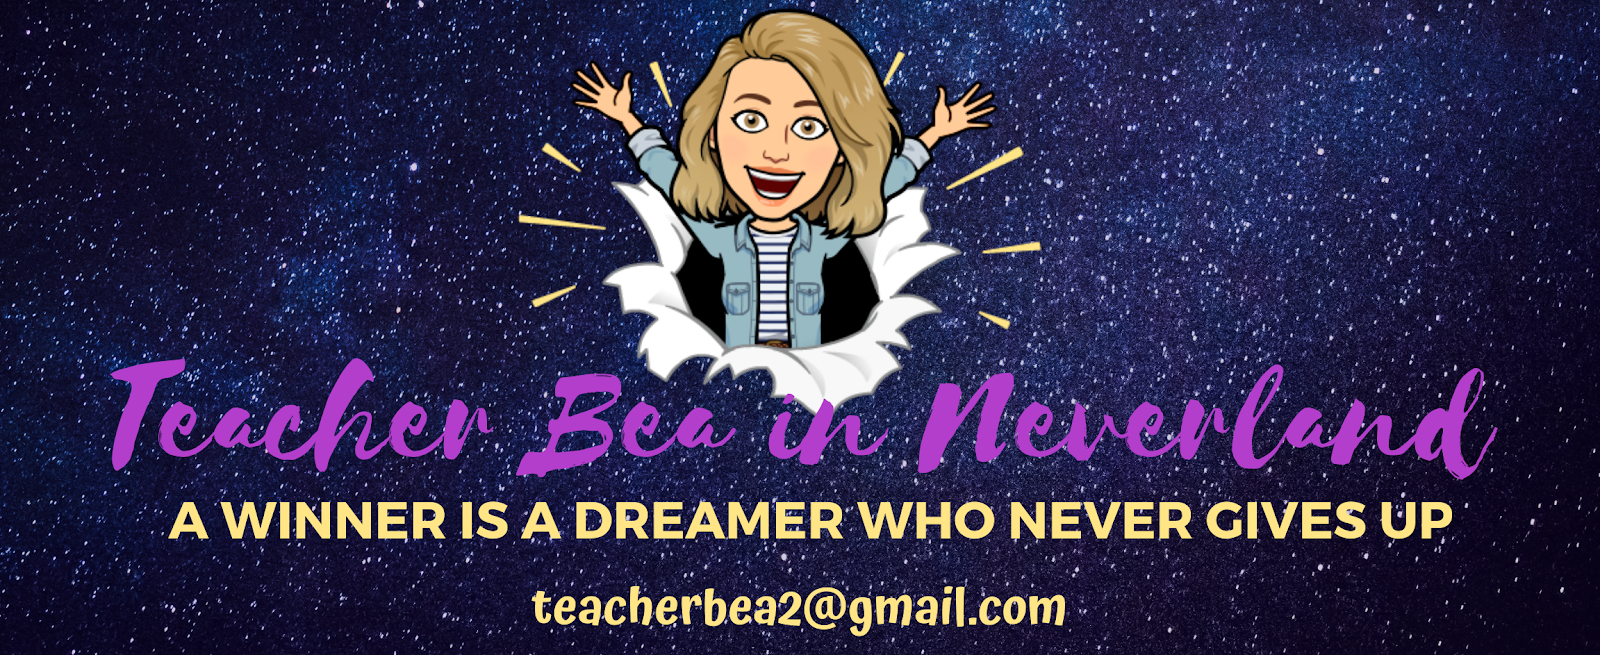 Teacher Bea in Neverland